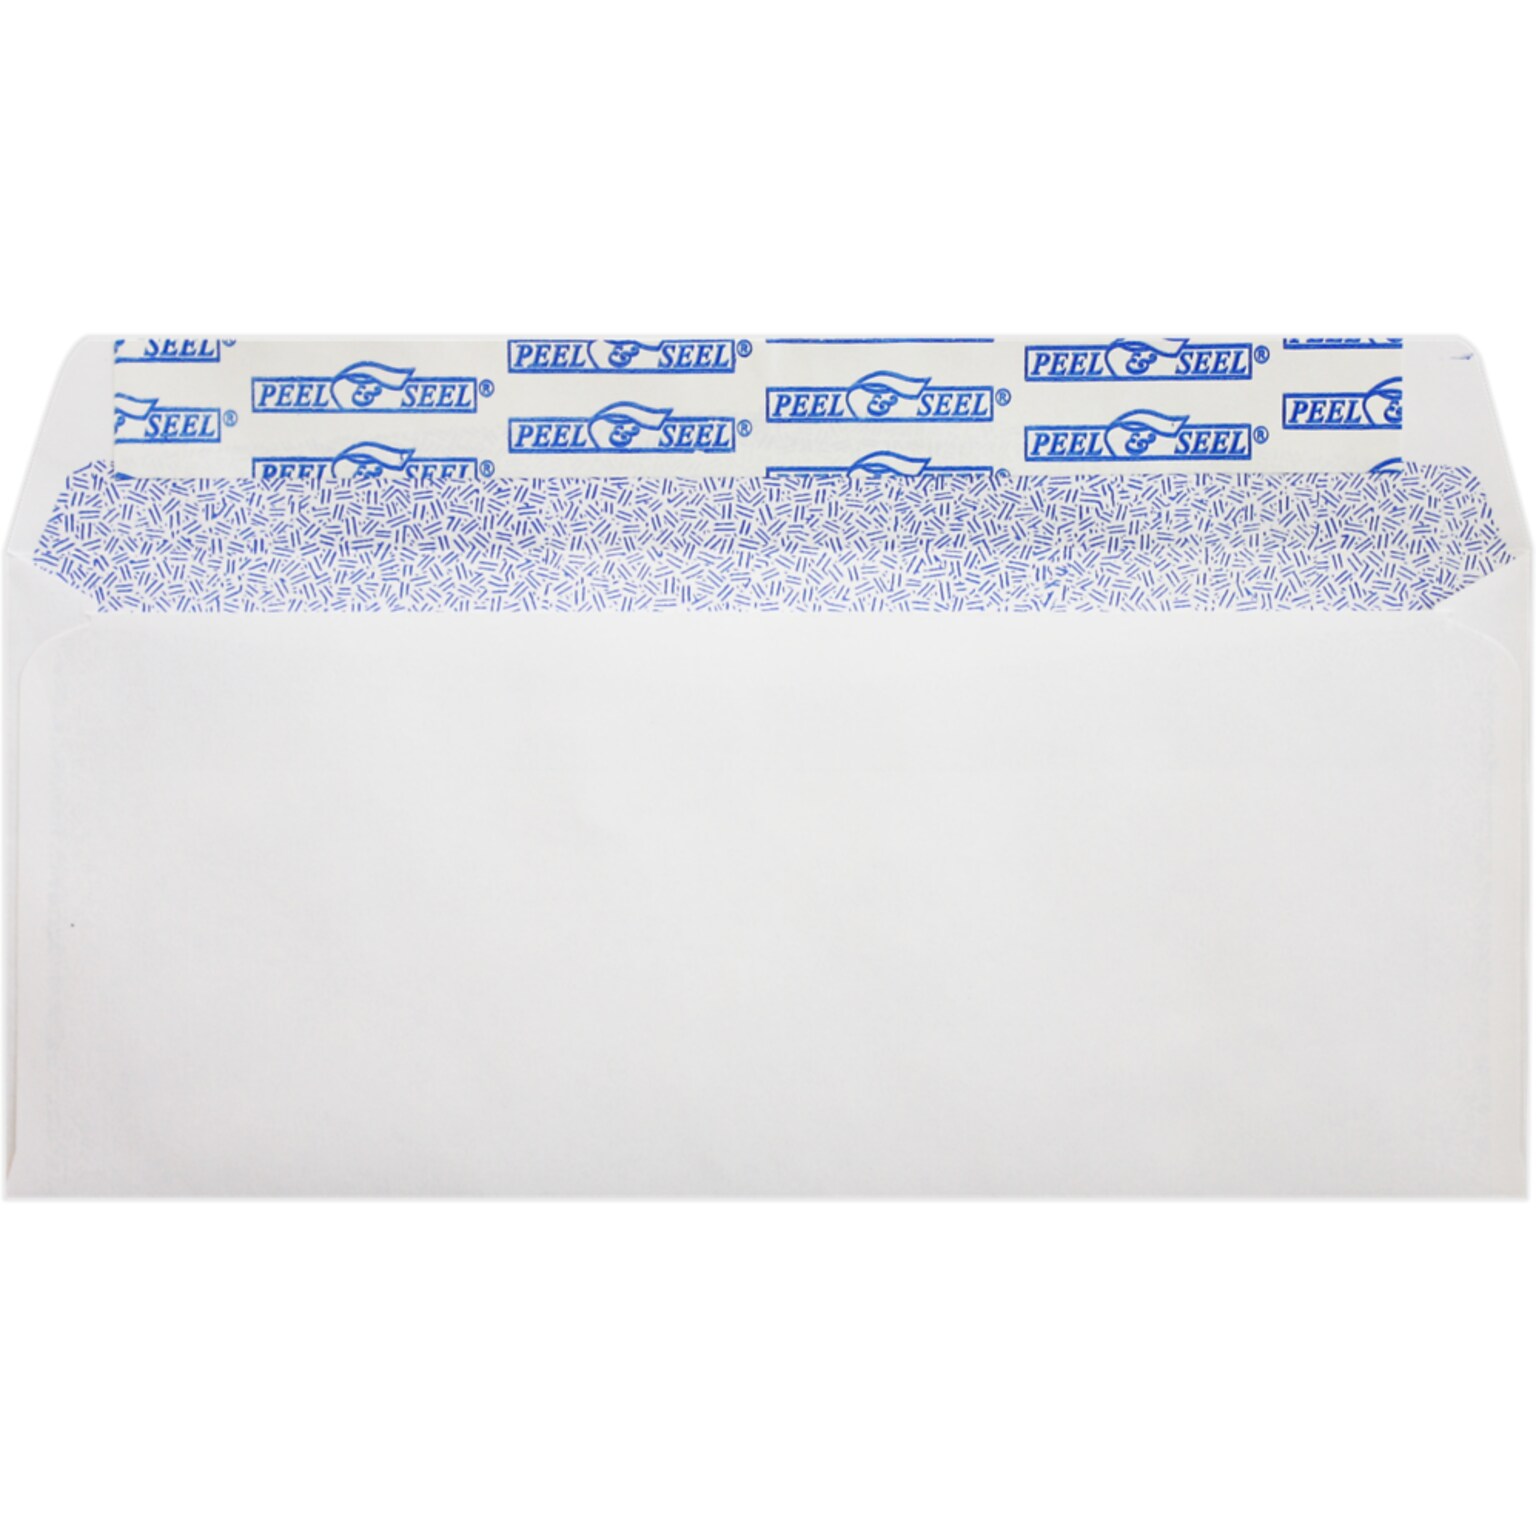 JAM Paper #10 Regular Envelopes, Peel & Seal, Security Tint, 4 1/8 x 9 1/2, White, 250 Pack (75747-250)